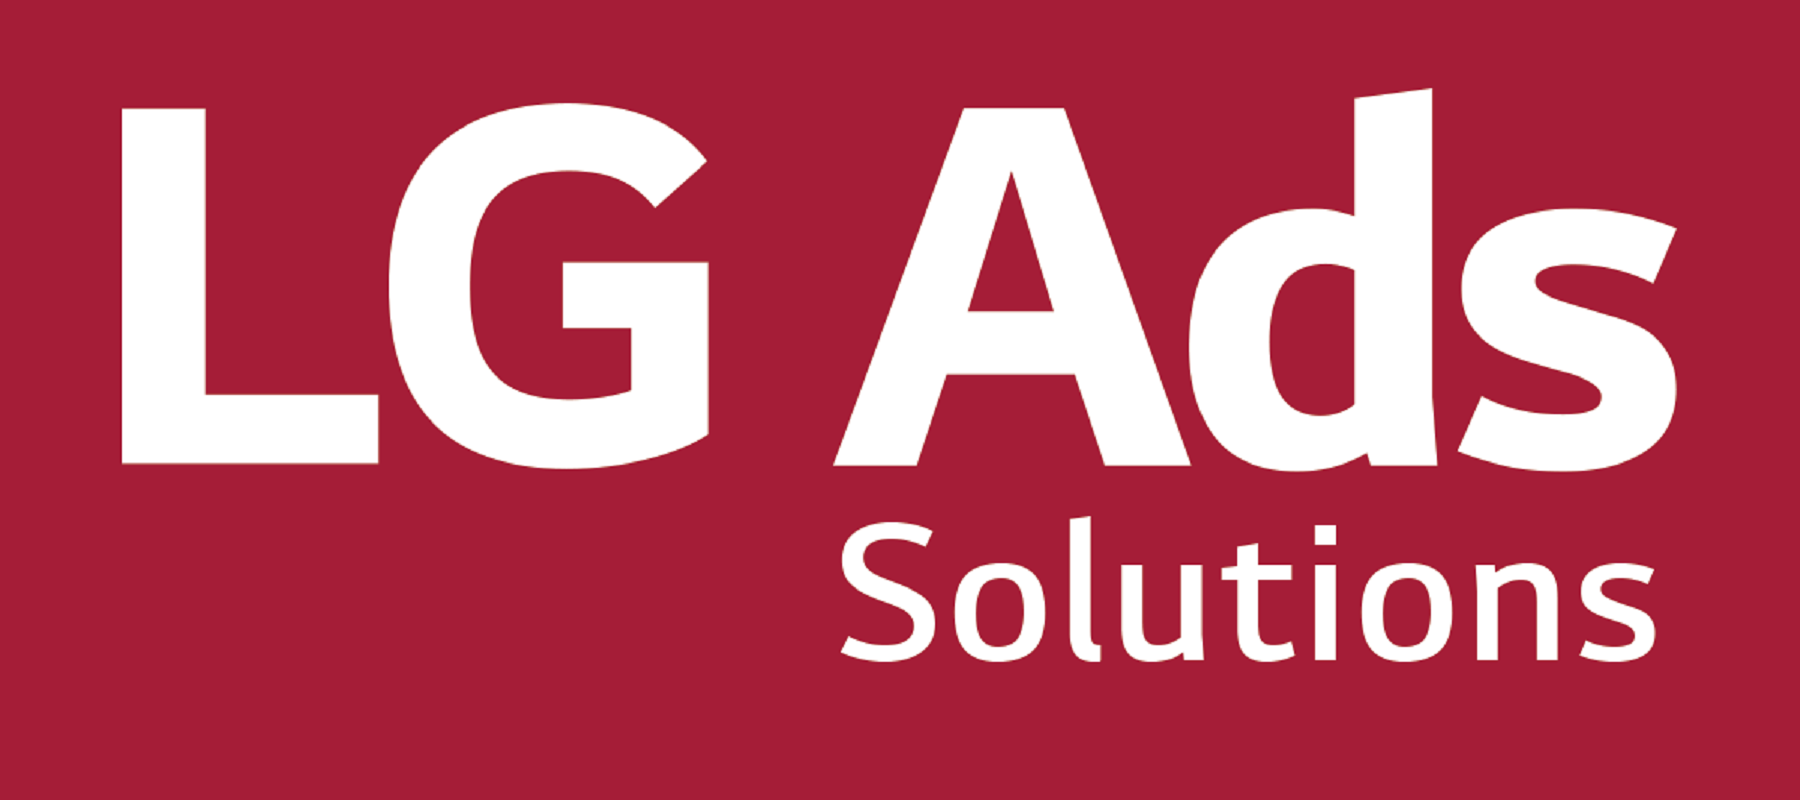 LG Ad Solutions names Angela Barnett as head of corporate communications